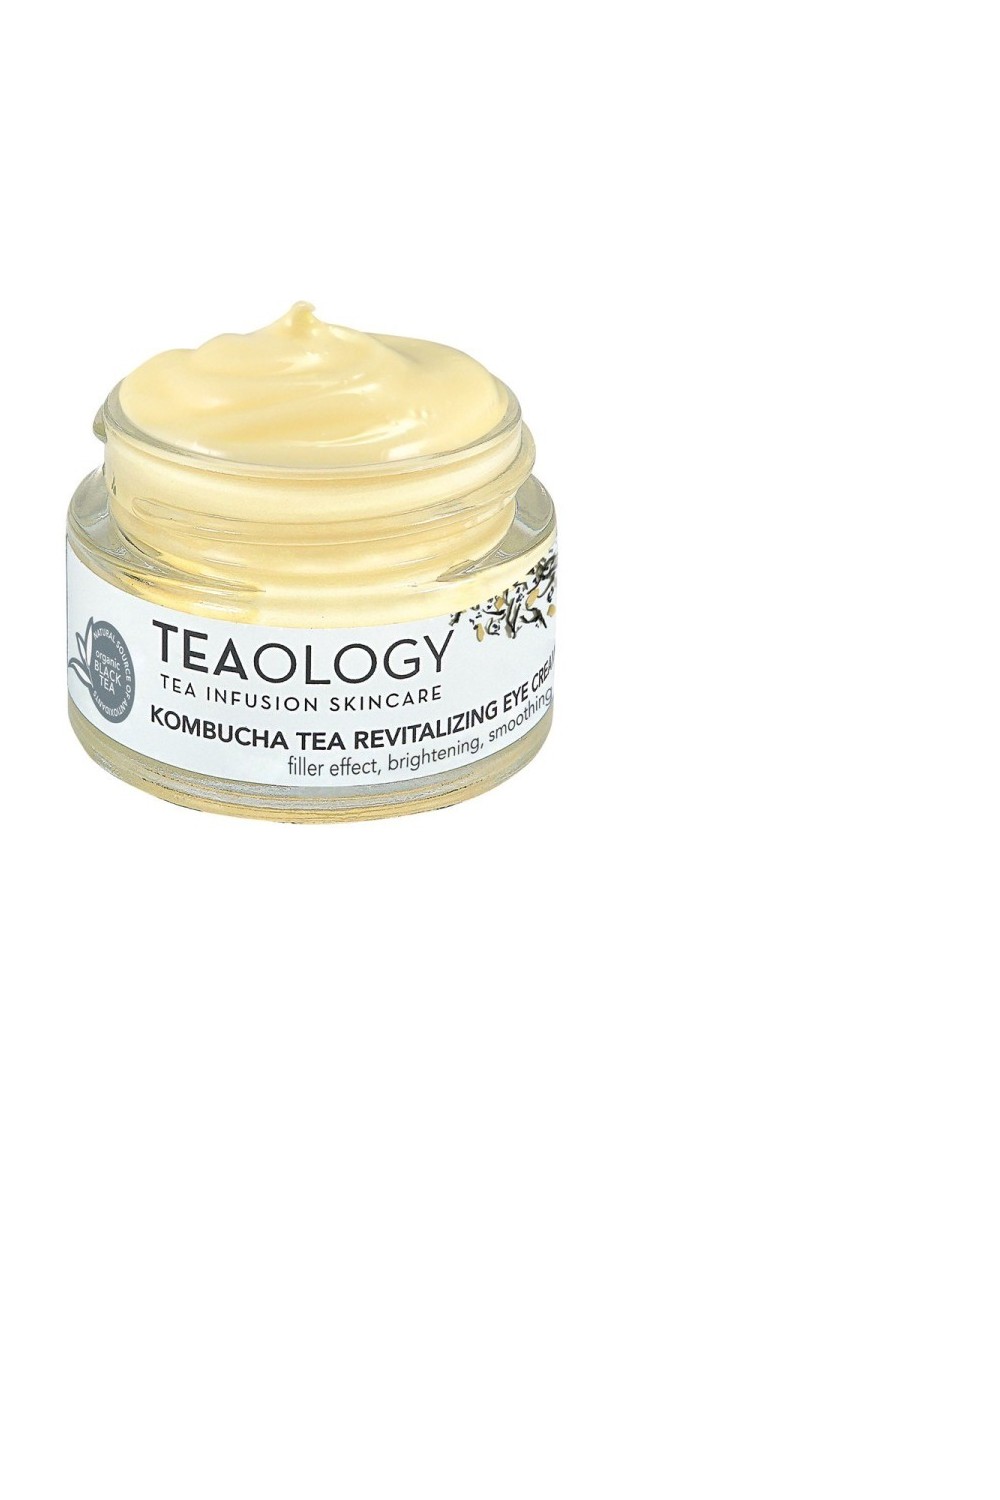 Teaology Kombucha Tea Revitalizing Eye Cream 15ml